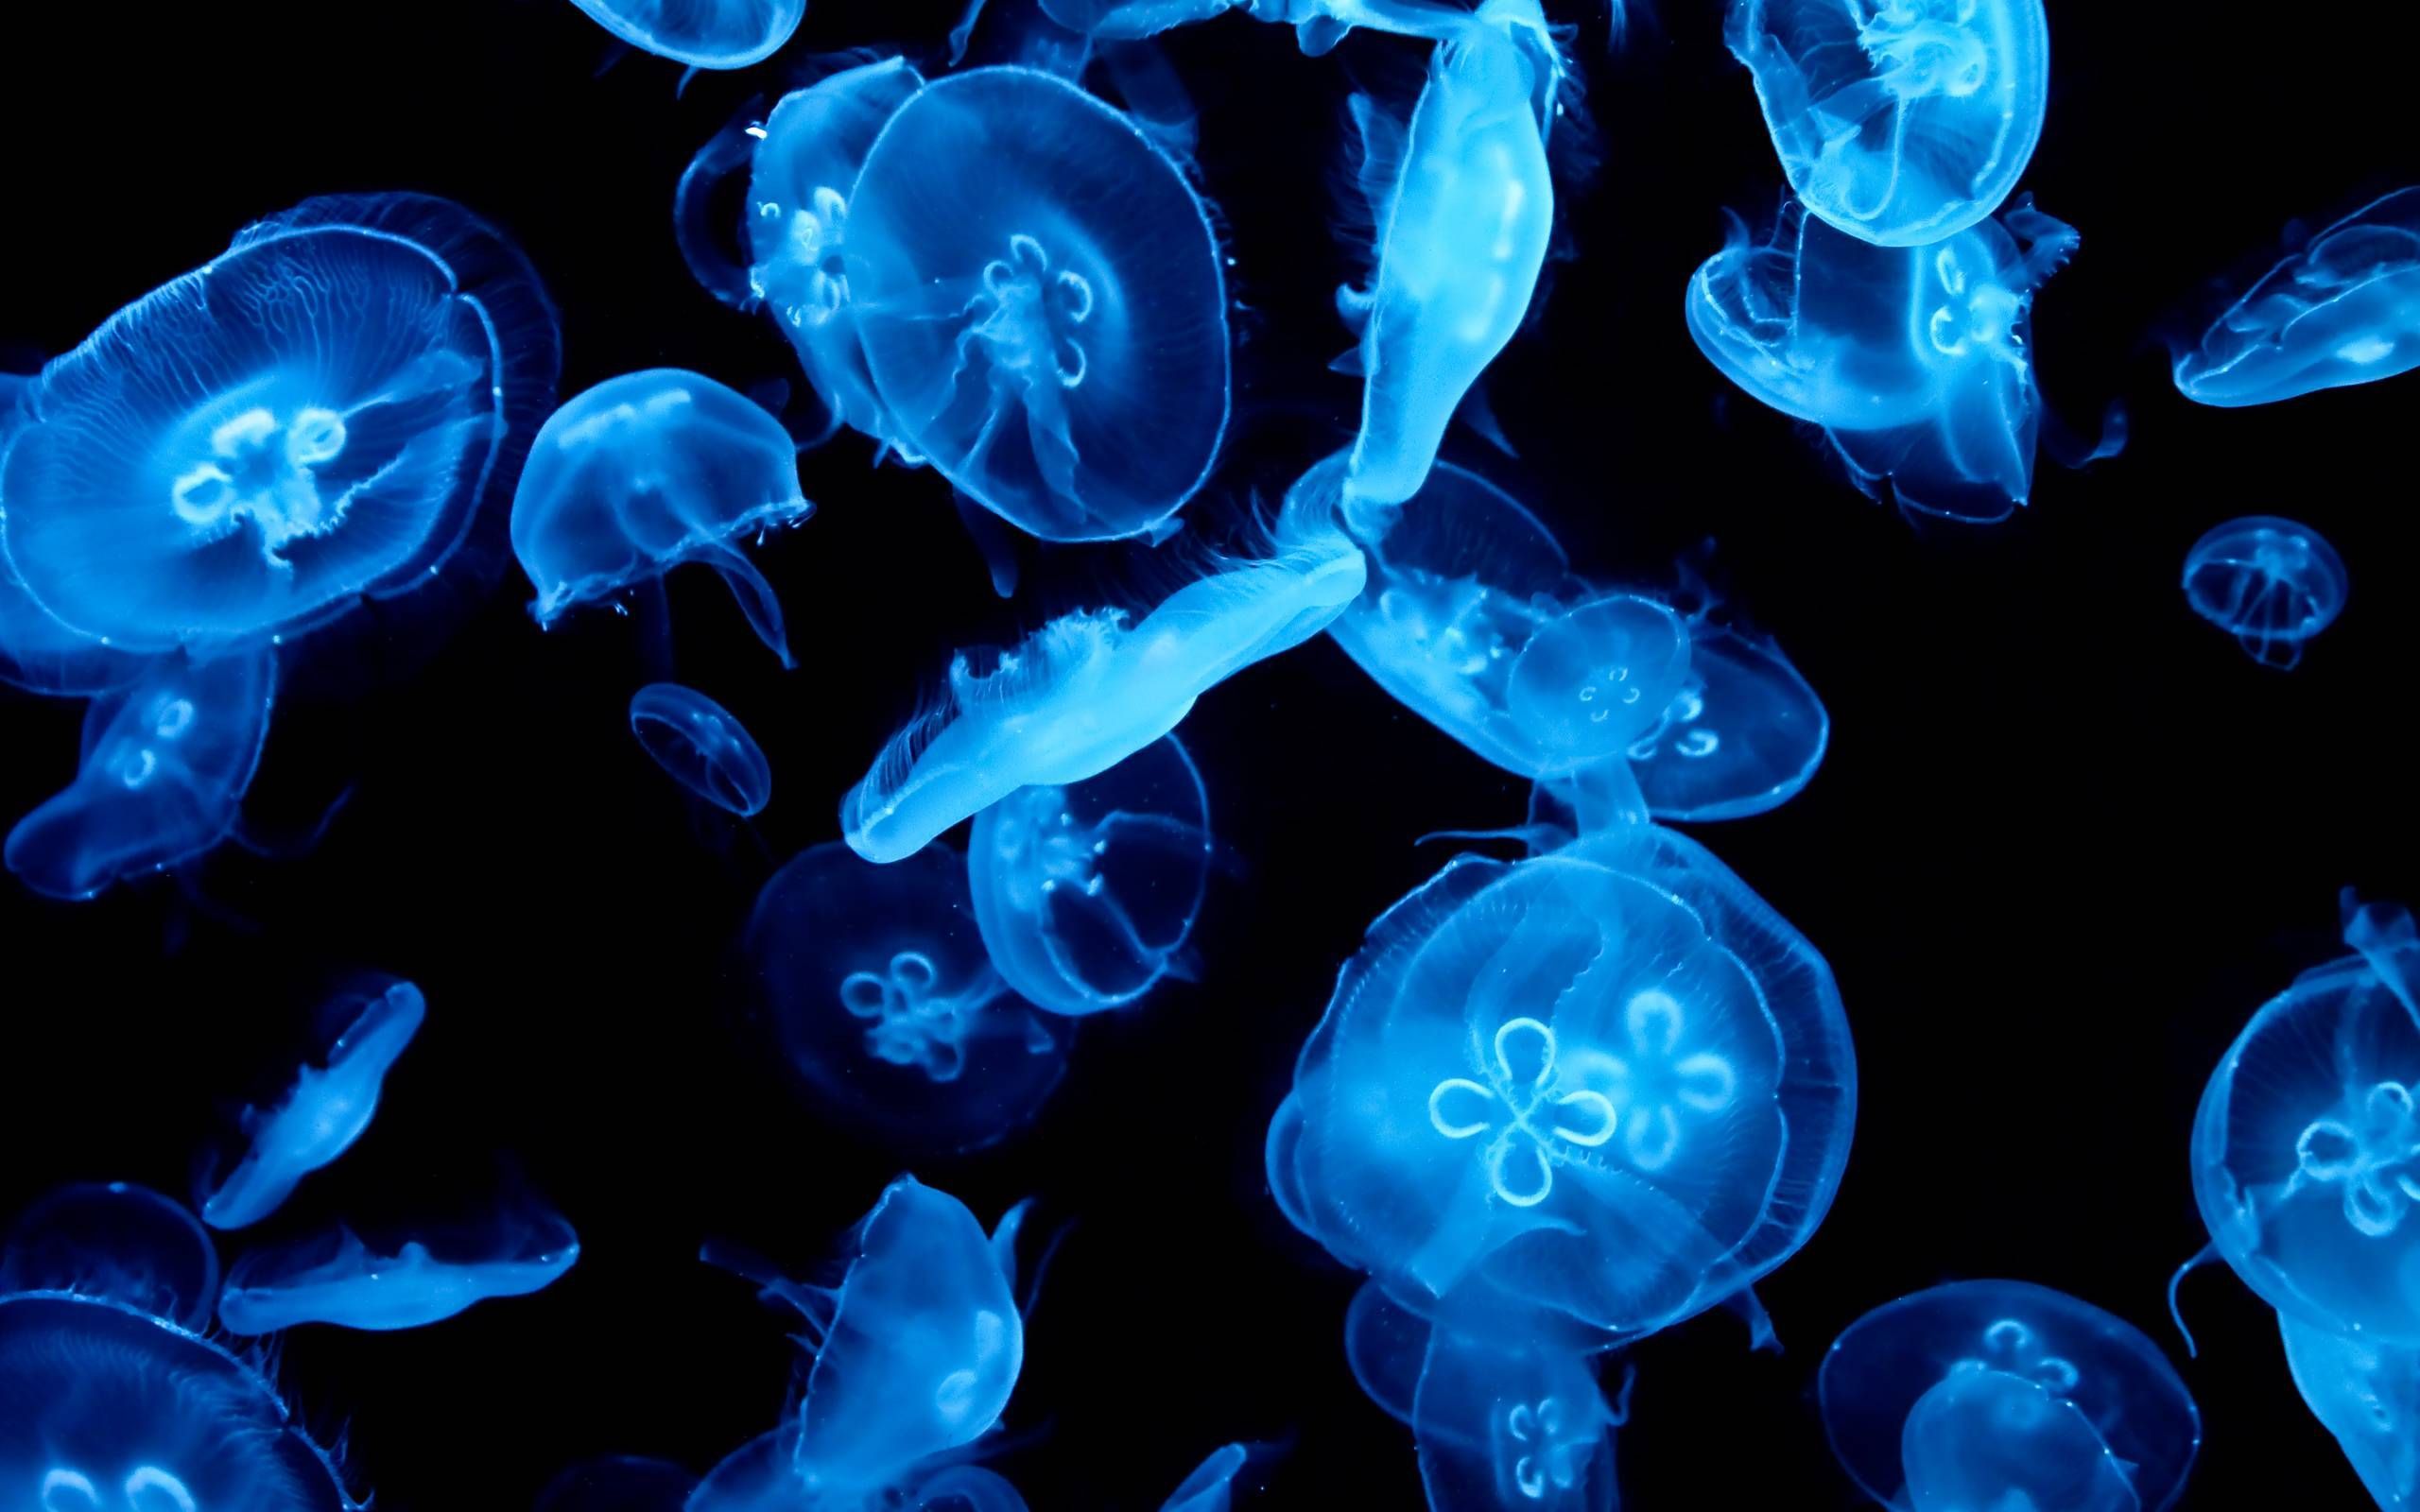 JellyFish HD Wallpaper. Blue jellyfish